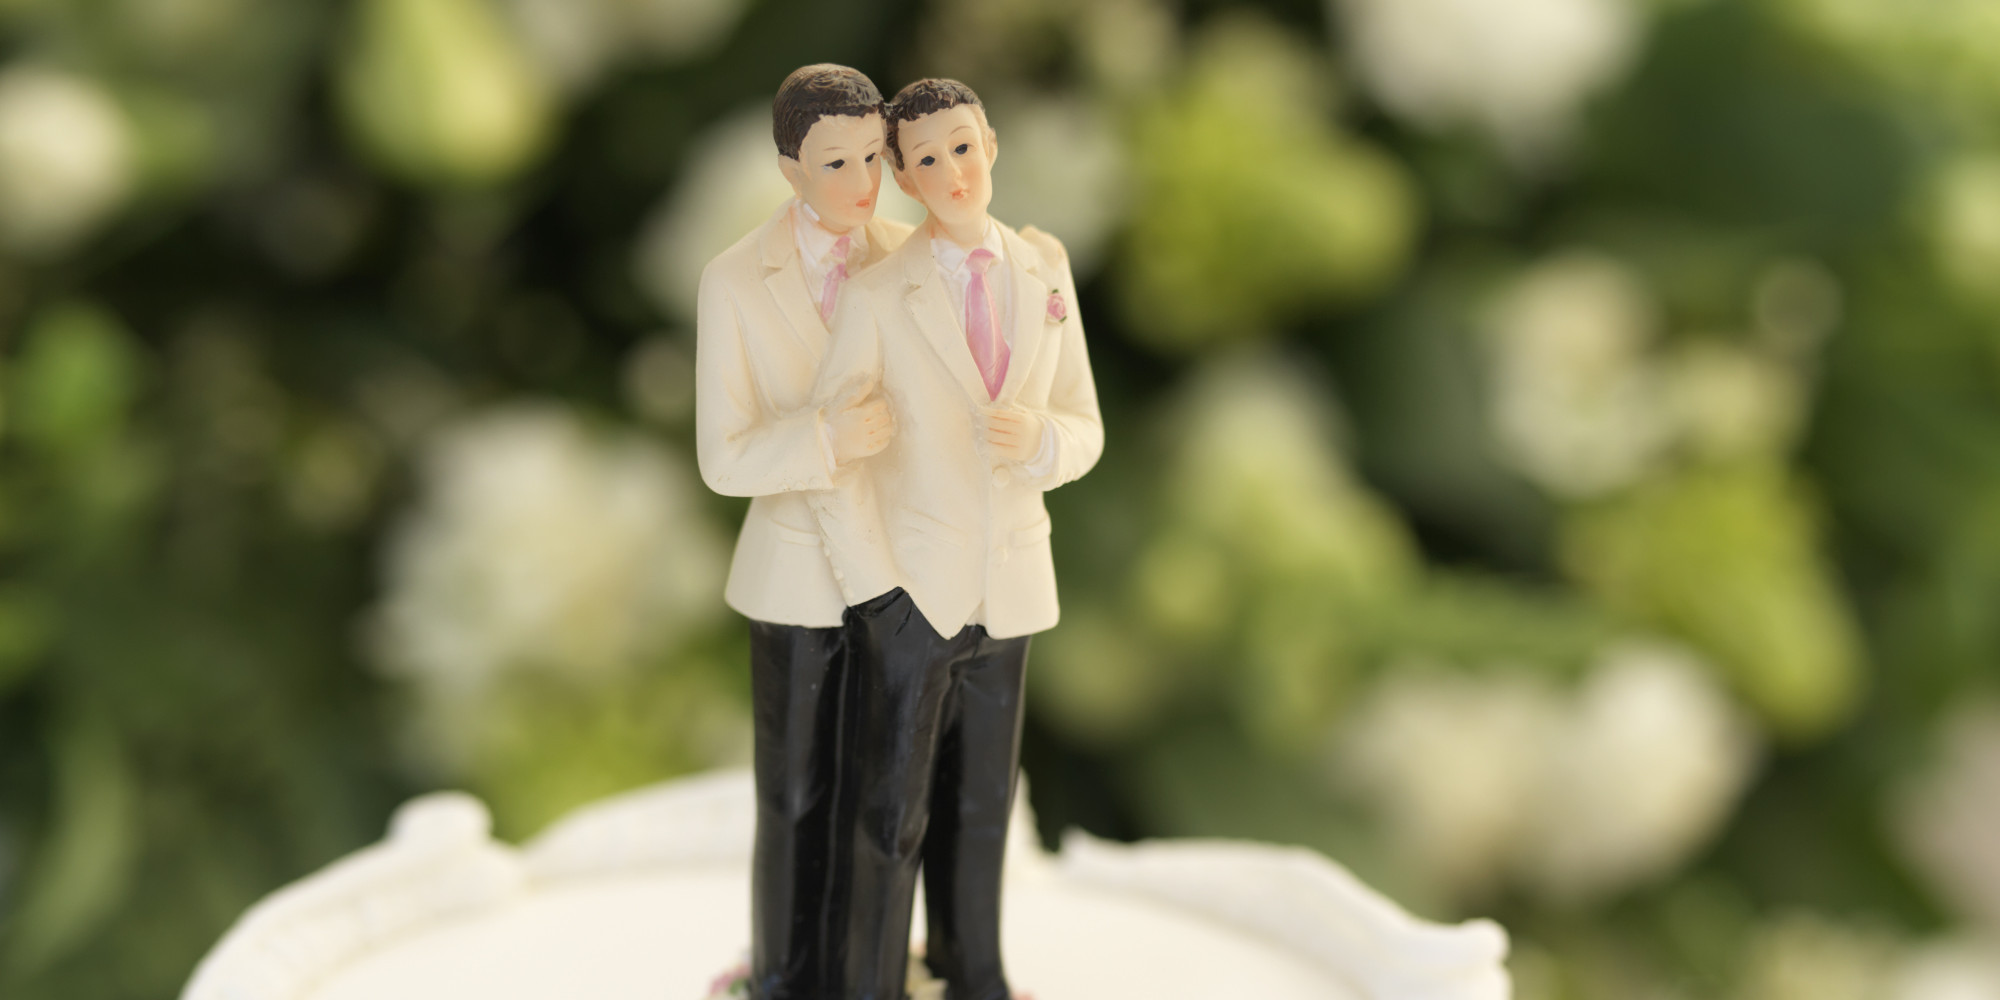 Gay Wedding Vows
 Indianapolis 111 Cakery Turns Away Gay Couple Seeking